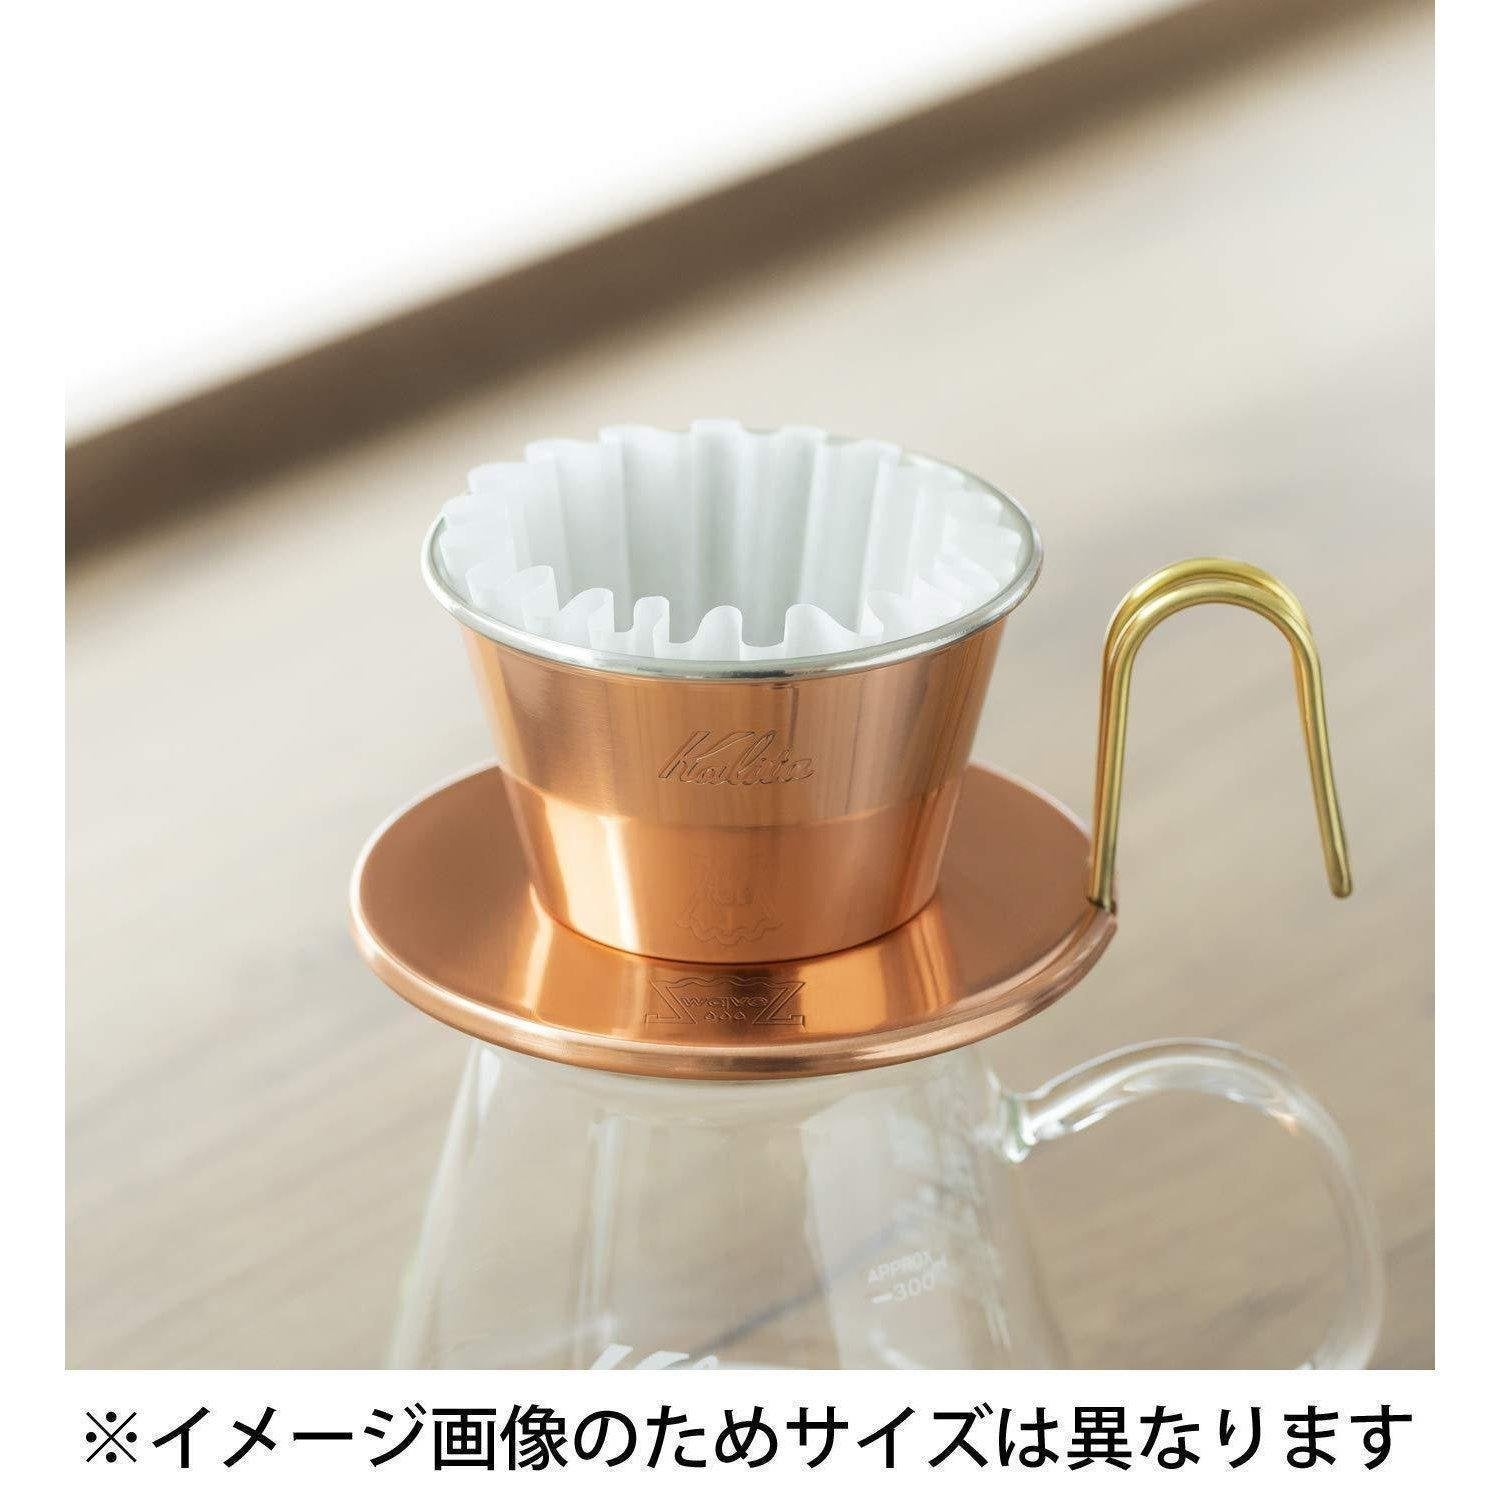 Kalita Copper Wave Coffee Dripper + Glass Server + Paper Filters Set